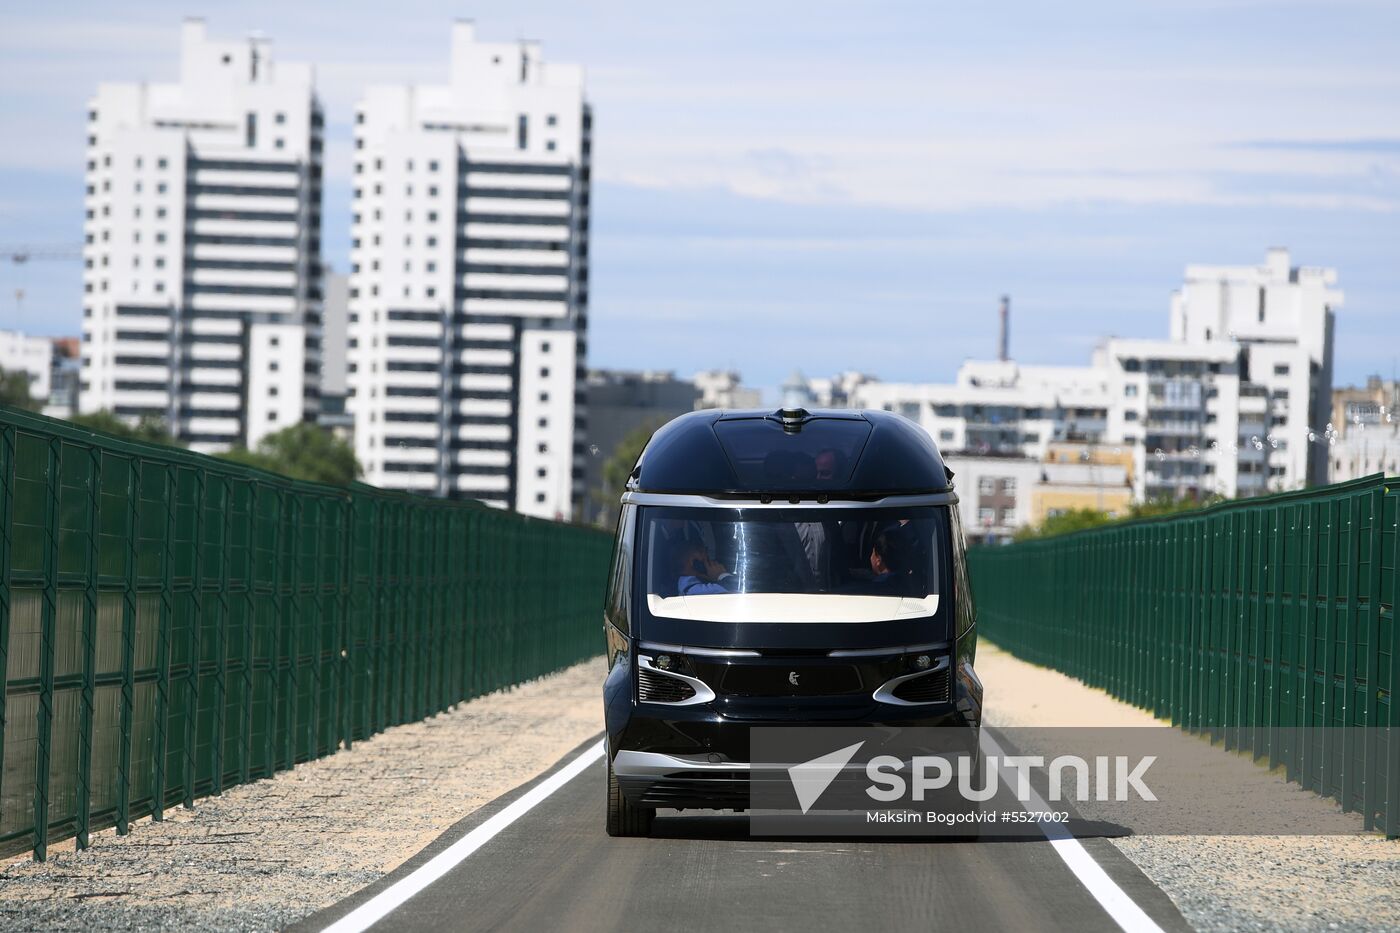 Kamaz presents SHUTTLE unmanned electric bus